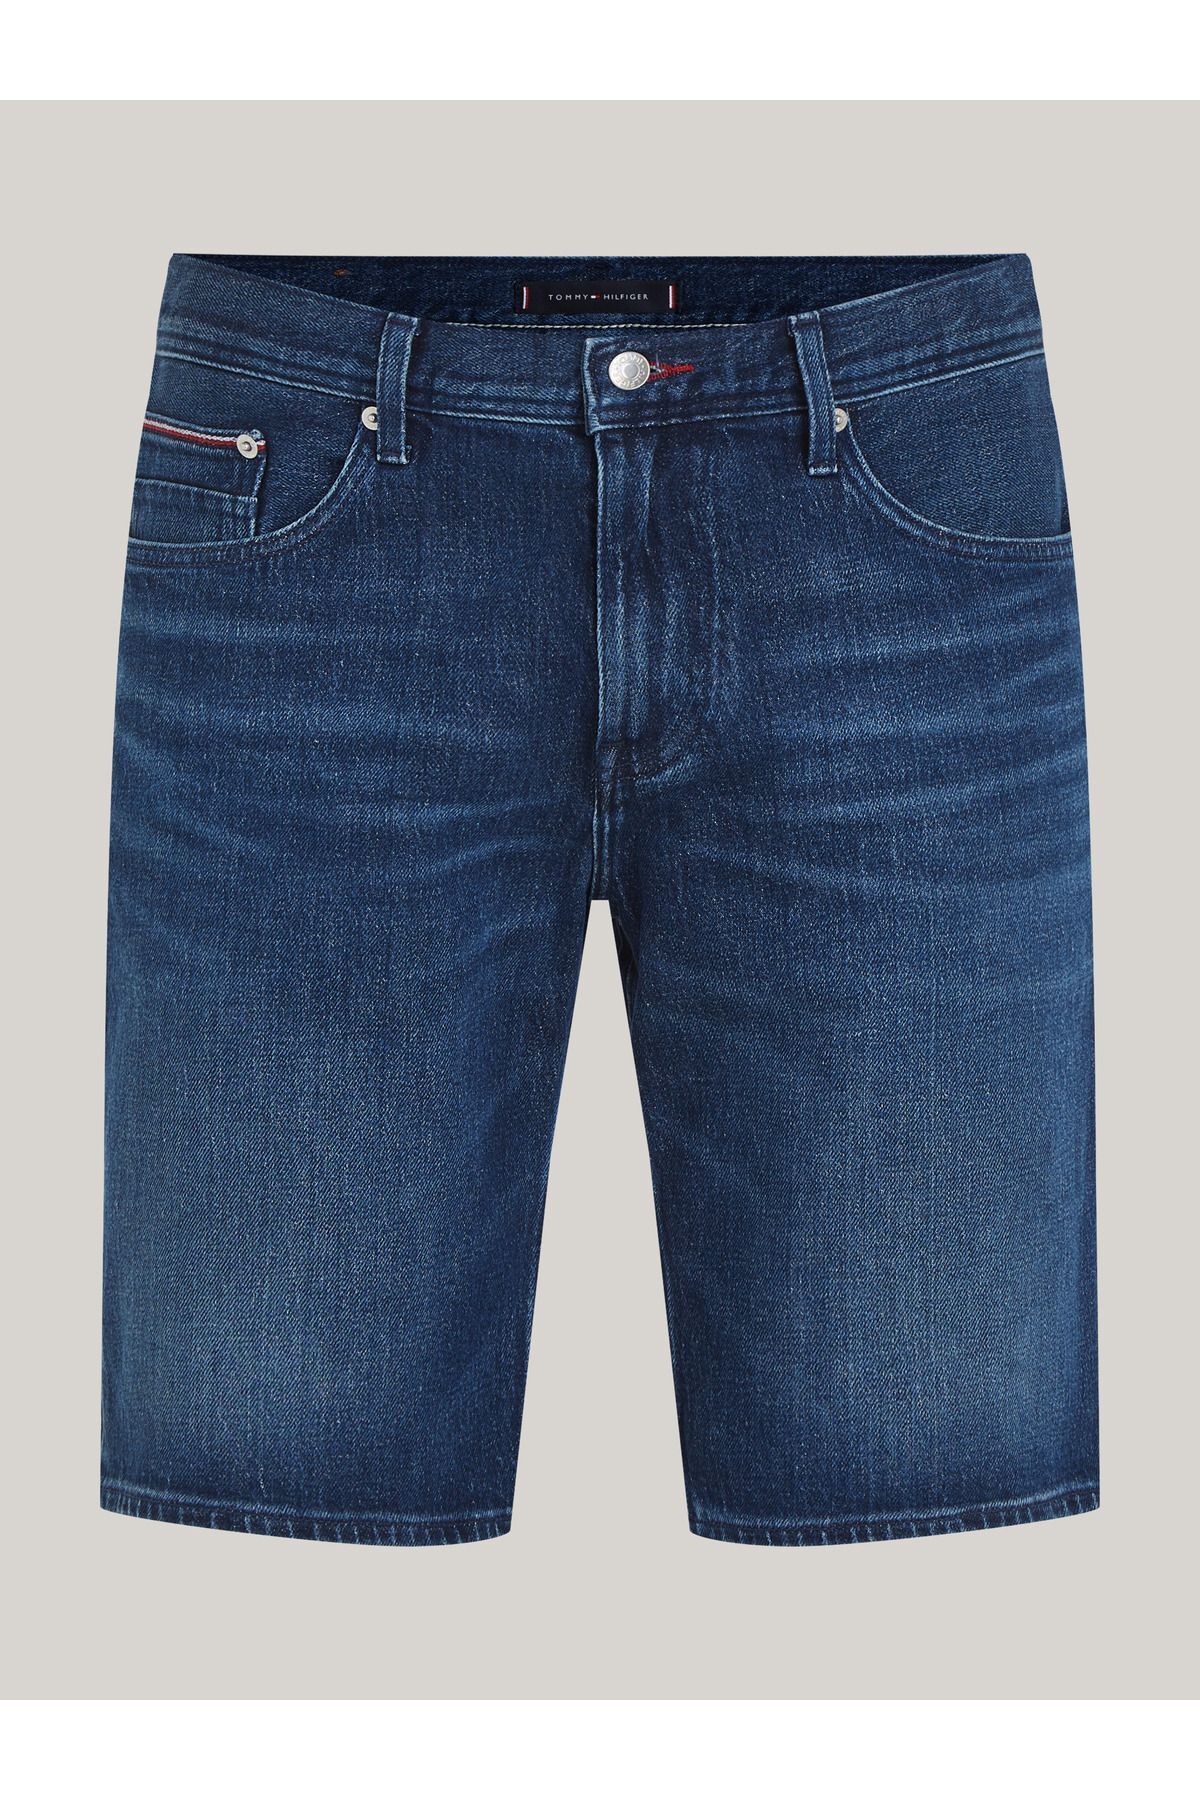 Tommy Hilfiger Erkek Marka Logolu Şık Görünüşlü  Kısa Kapri Pantolon Jeans Kapri MW0MW35176-1BL